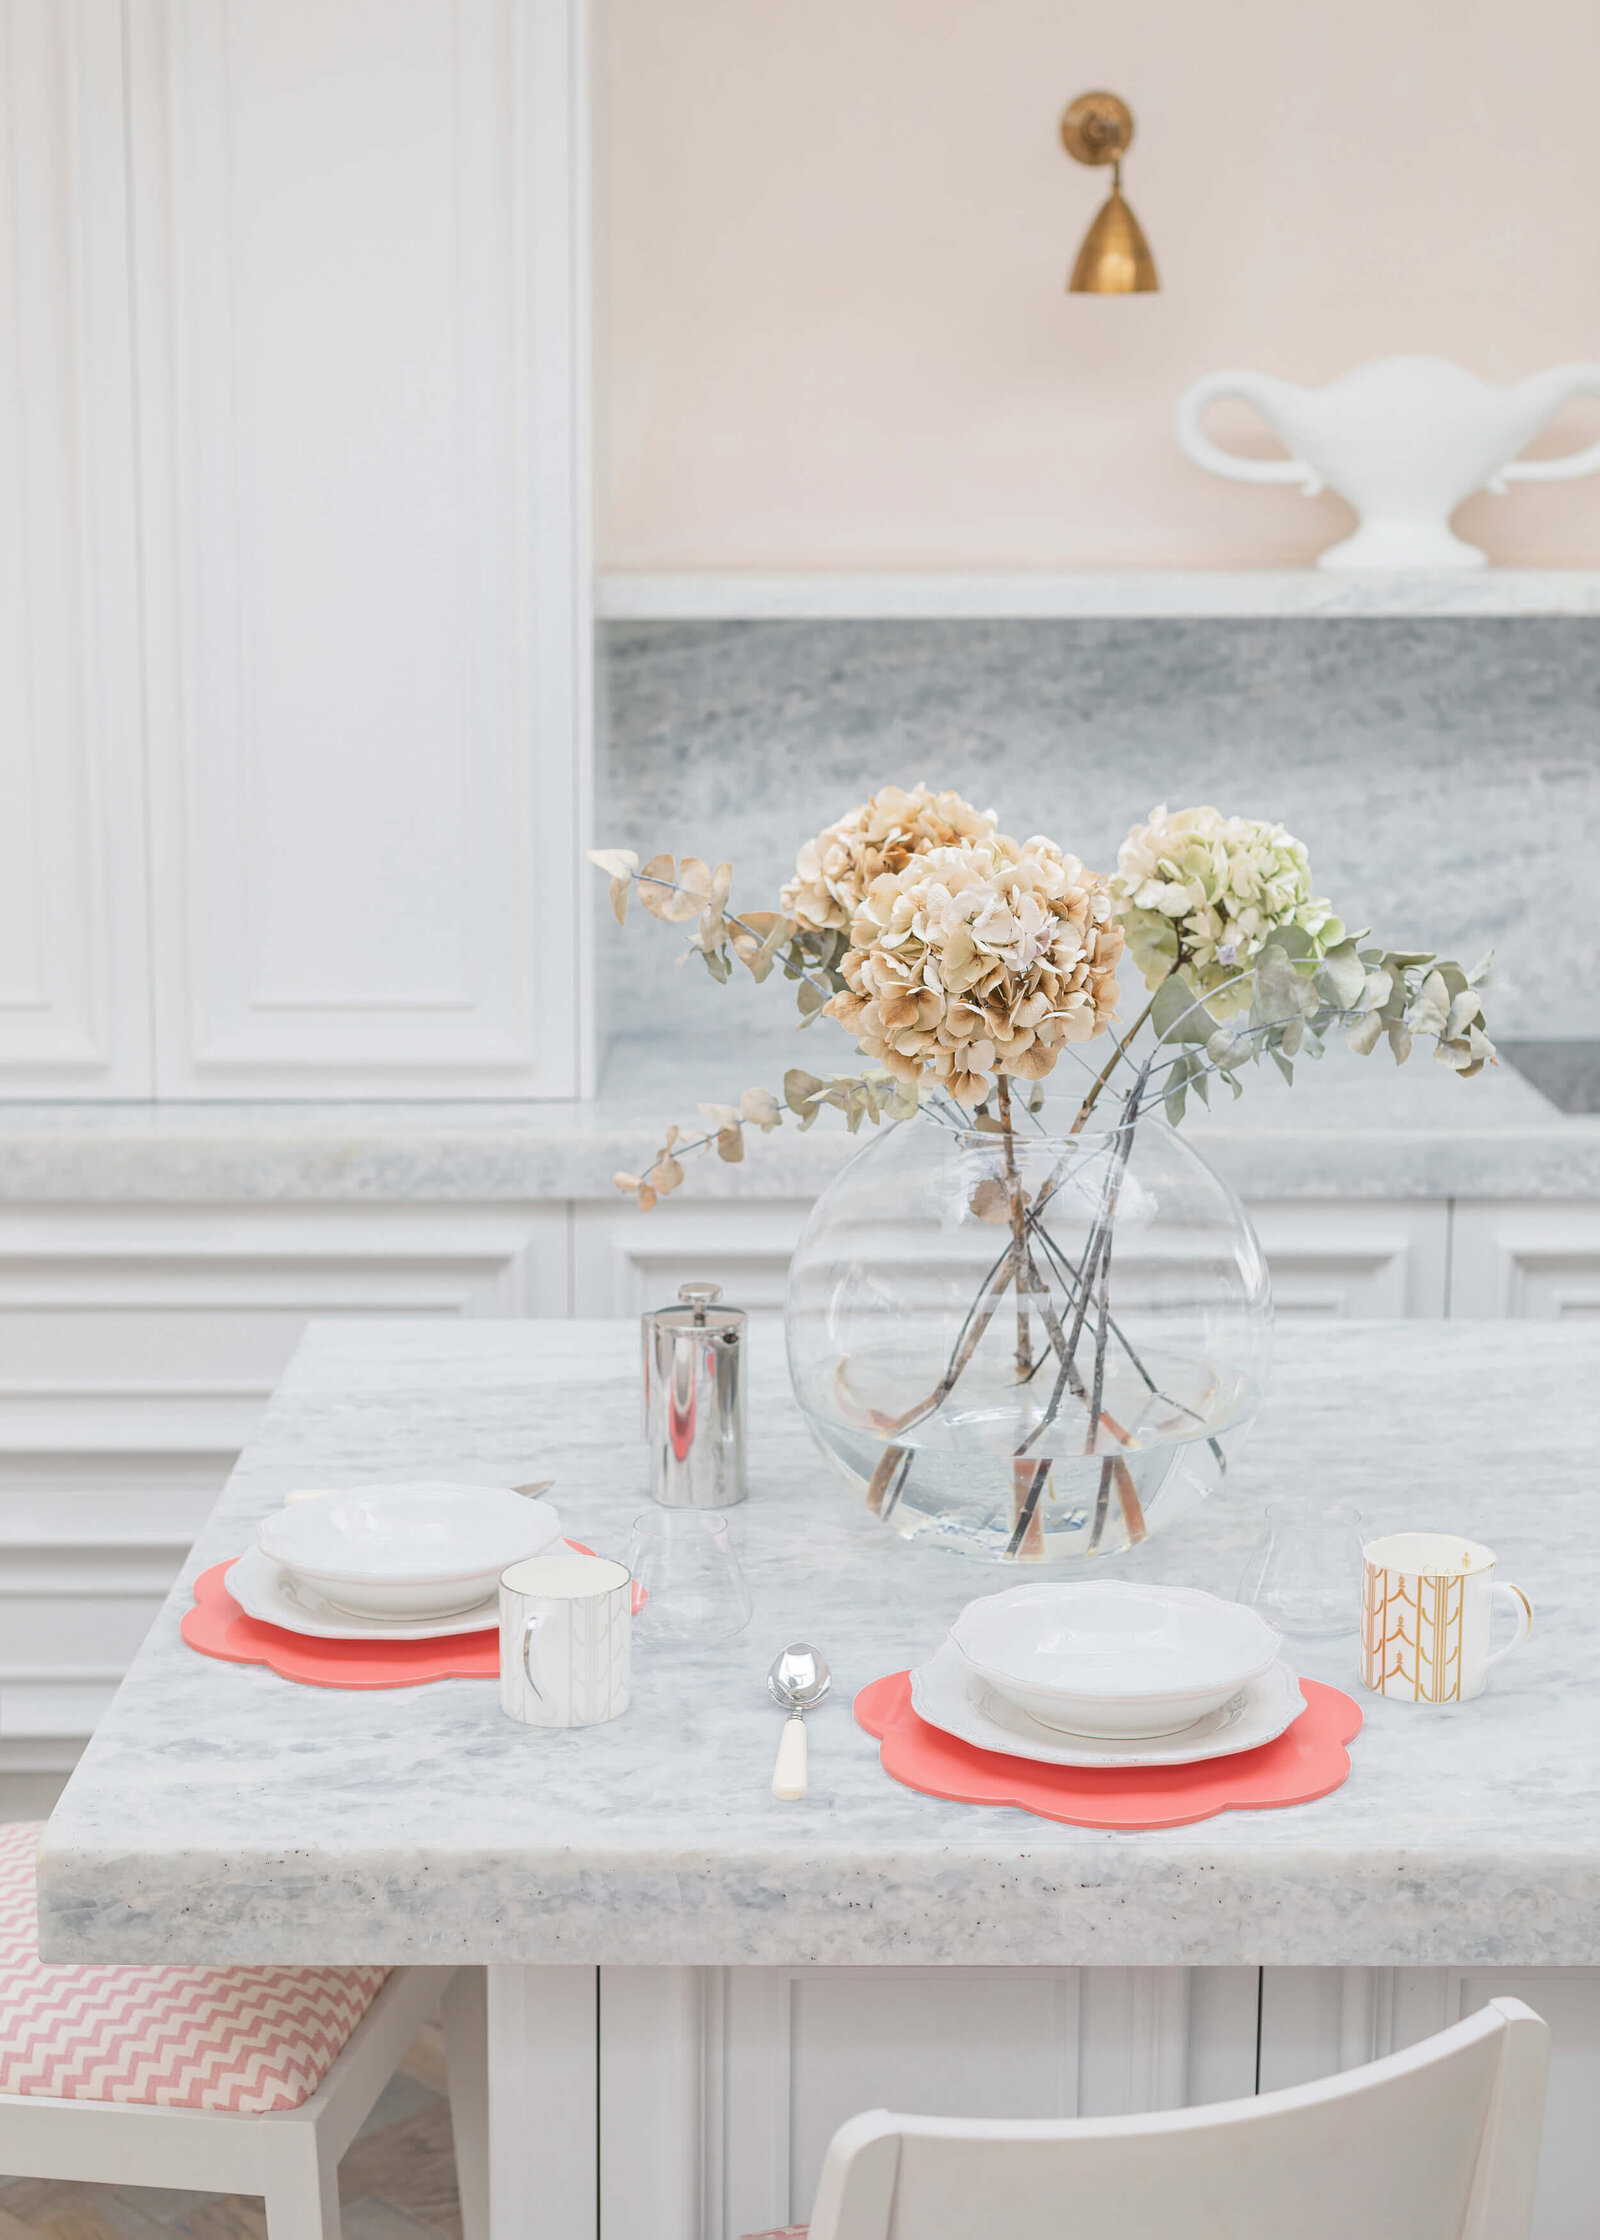 chloe-winstanley-editorial-addison-ross-sheer-luxe-kitchen-interiors